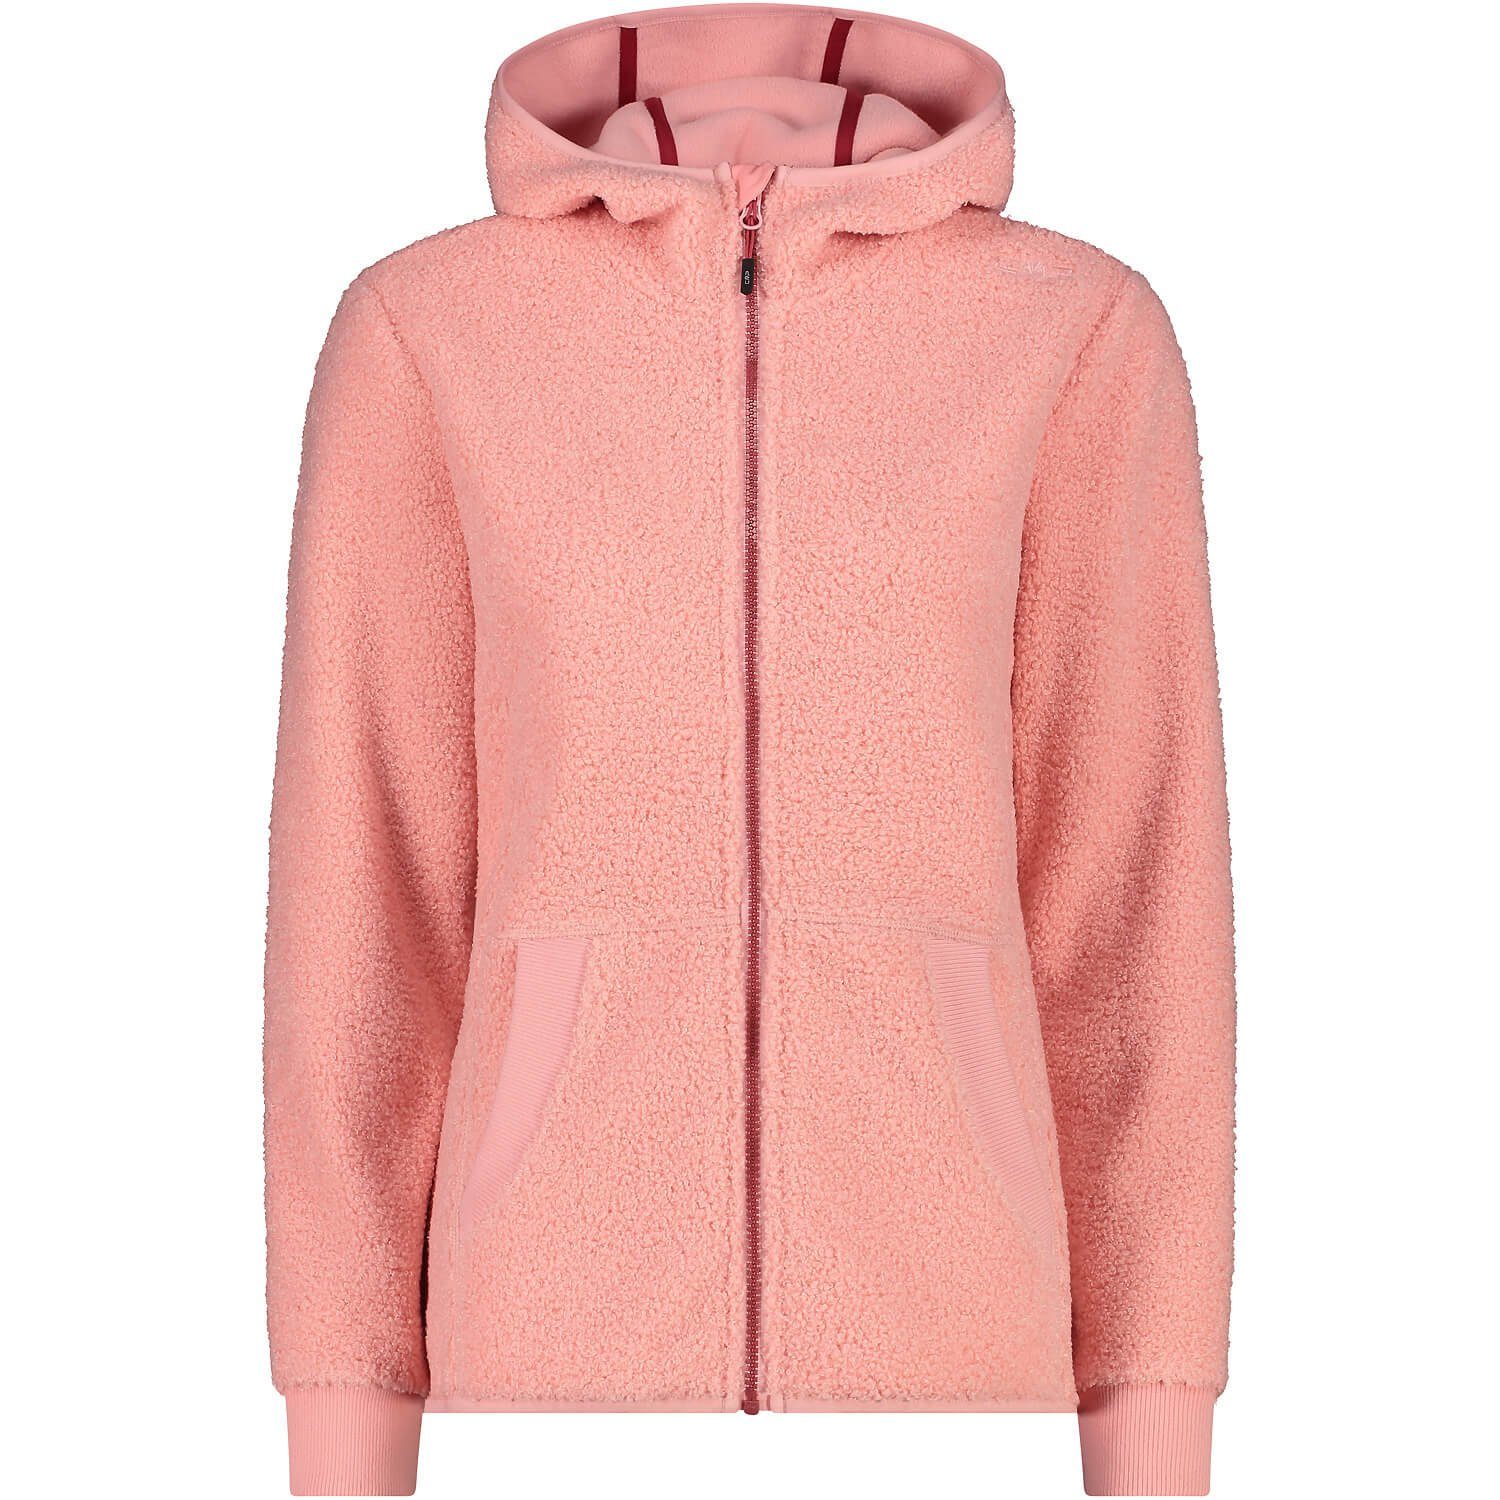 Fleecematerial Highloft-Fleece™, wärmendem fix aus besonders Fleecejacke Jacket hood CMP